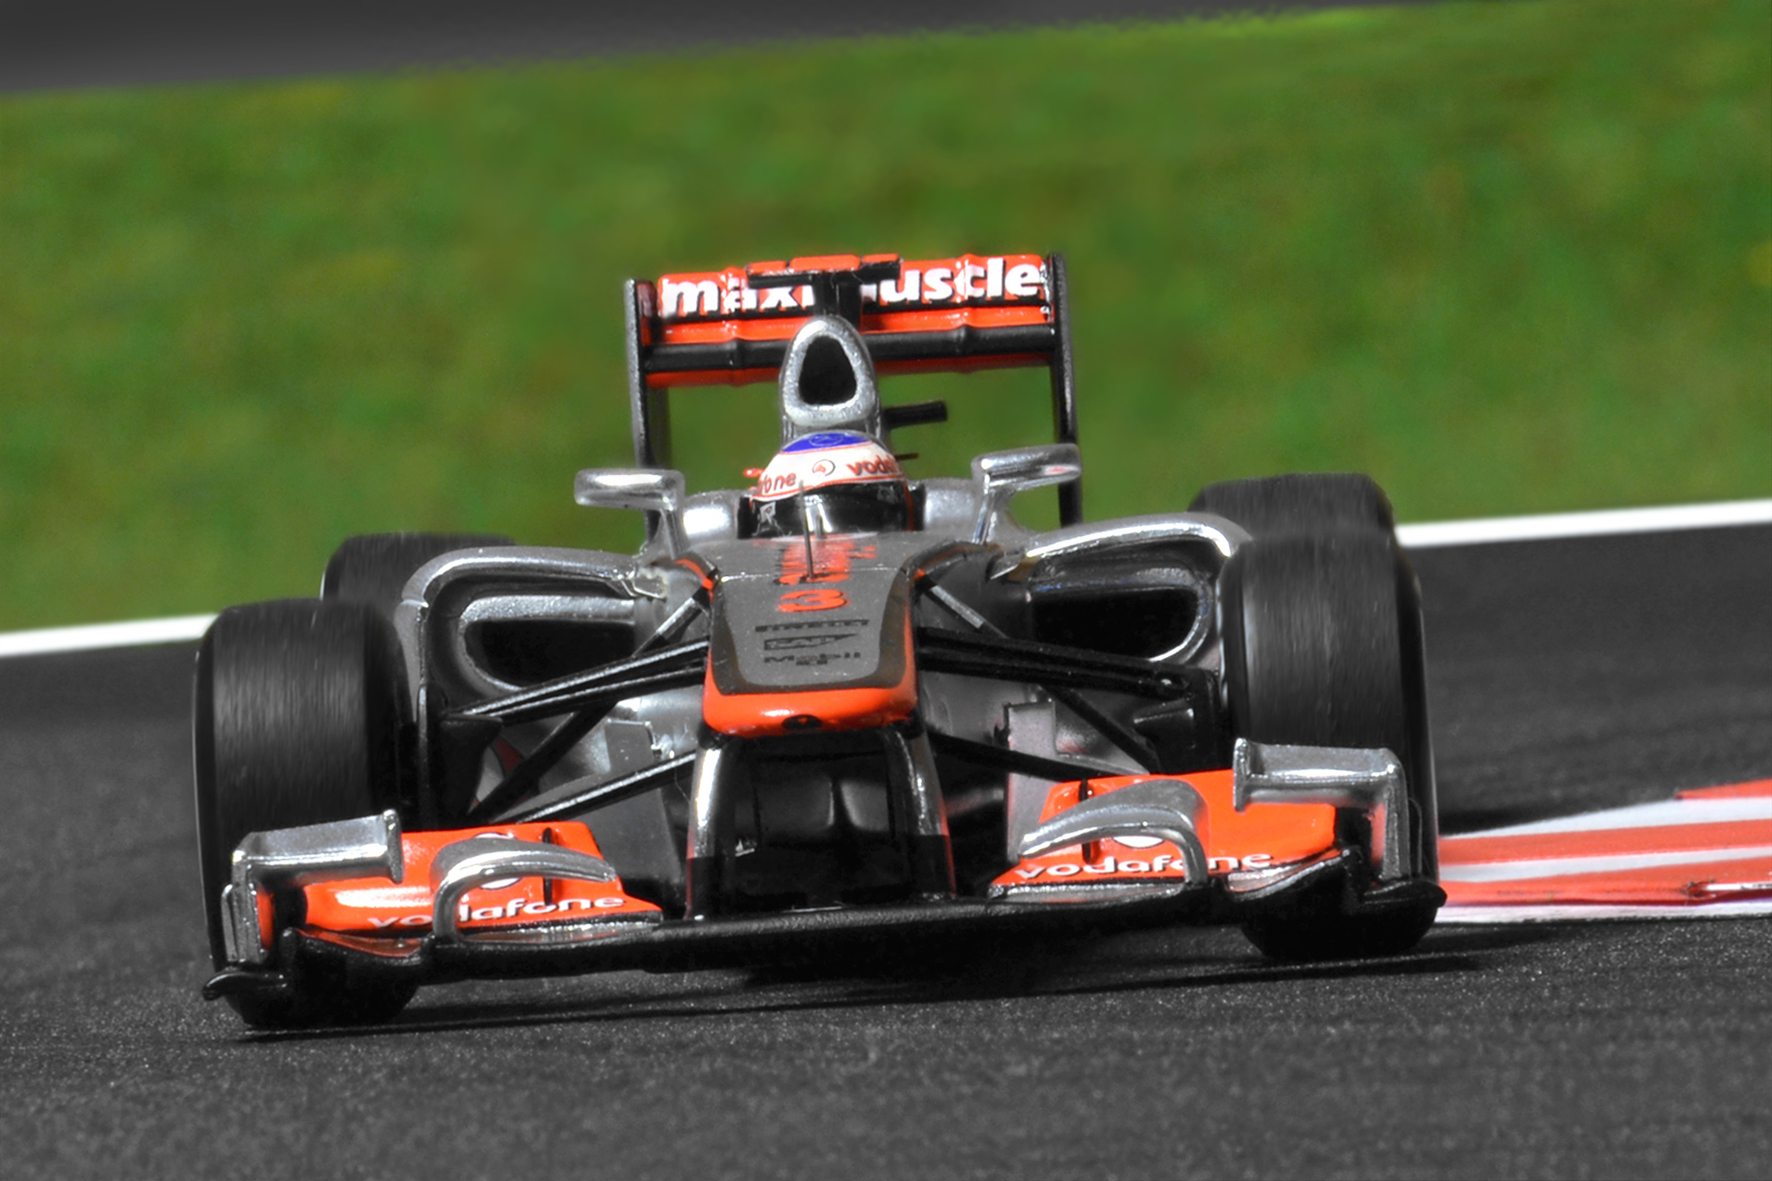 McLaren MP4-27 Jenson Button 2012 - Spark 1:43